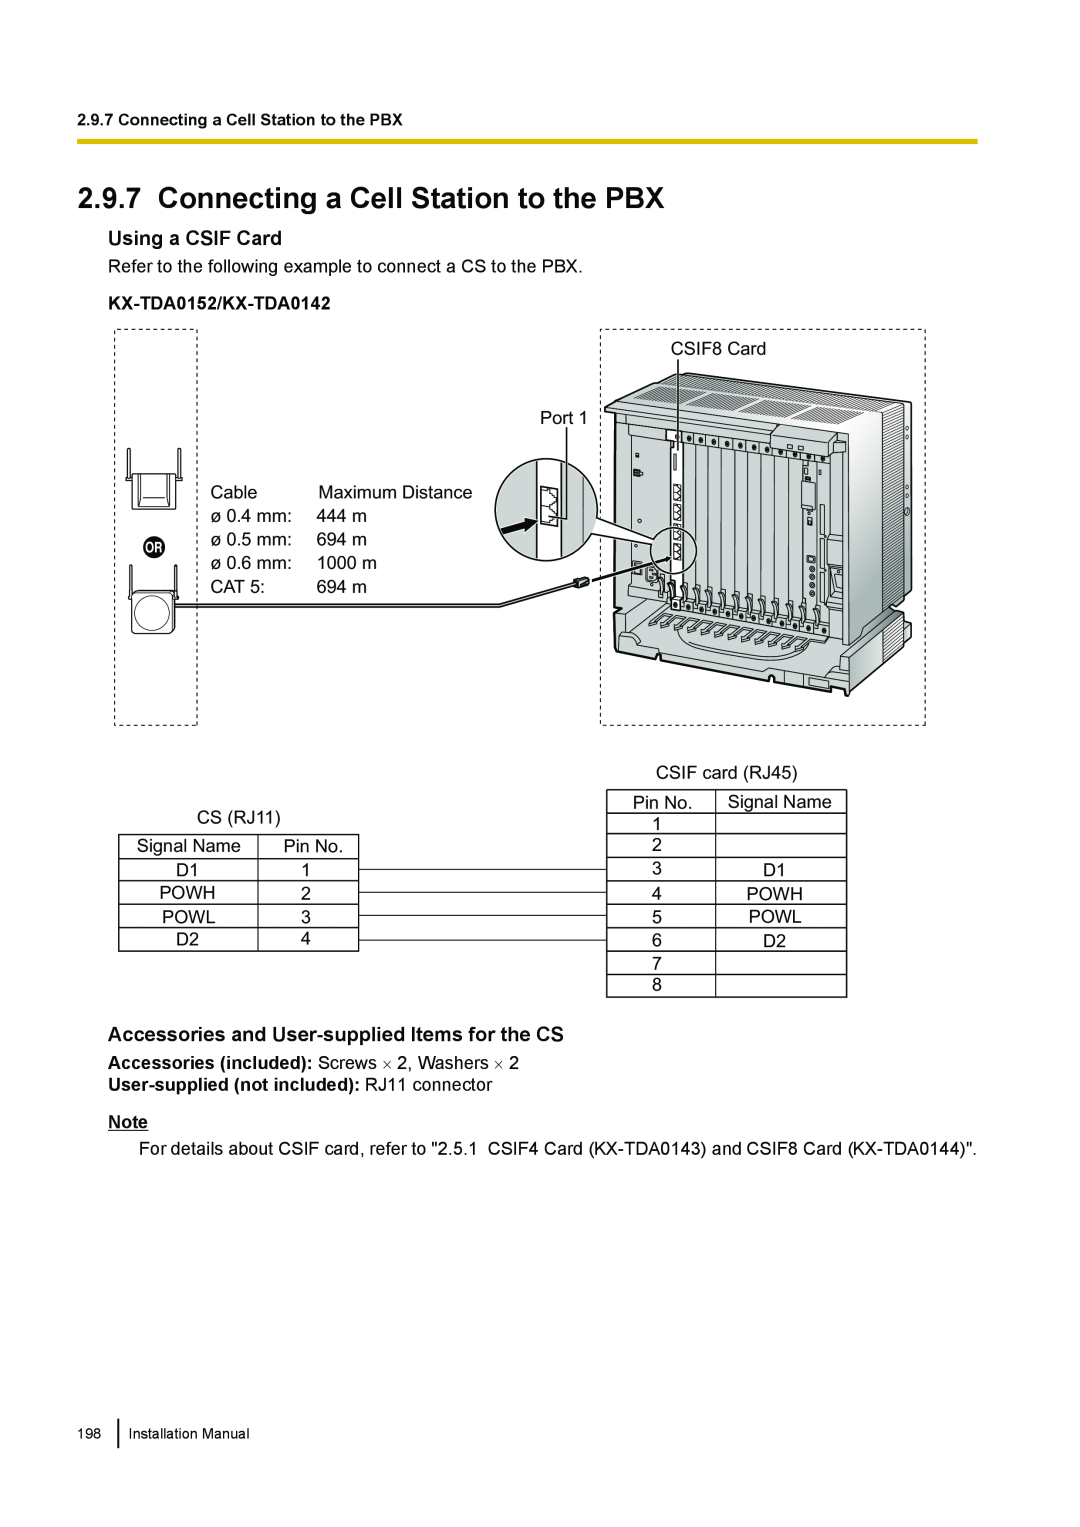 Panasonic KX-TDA100 installation manual Connecting a Cell Station to the PBX, Using a CSIF Card, KX-TDA0152/KX-TDA0142 